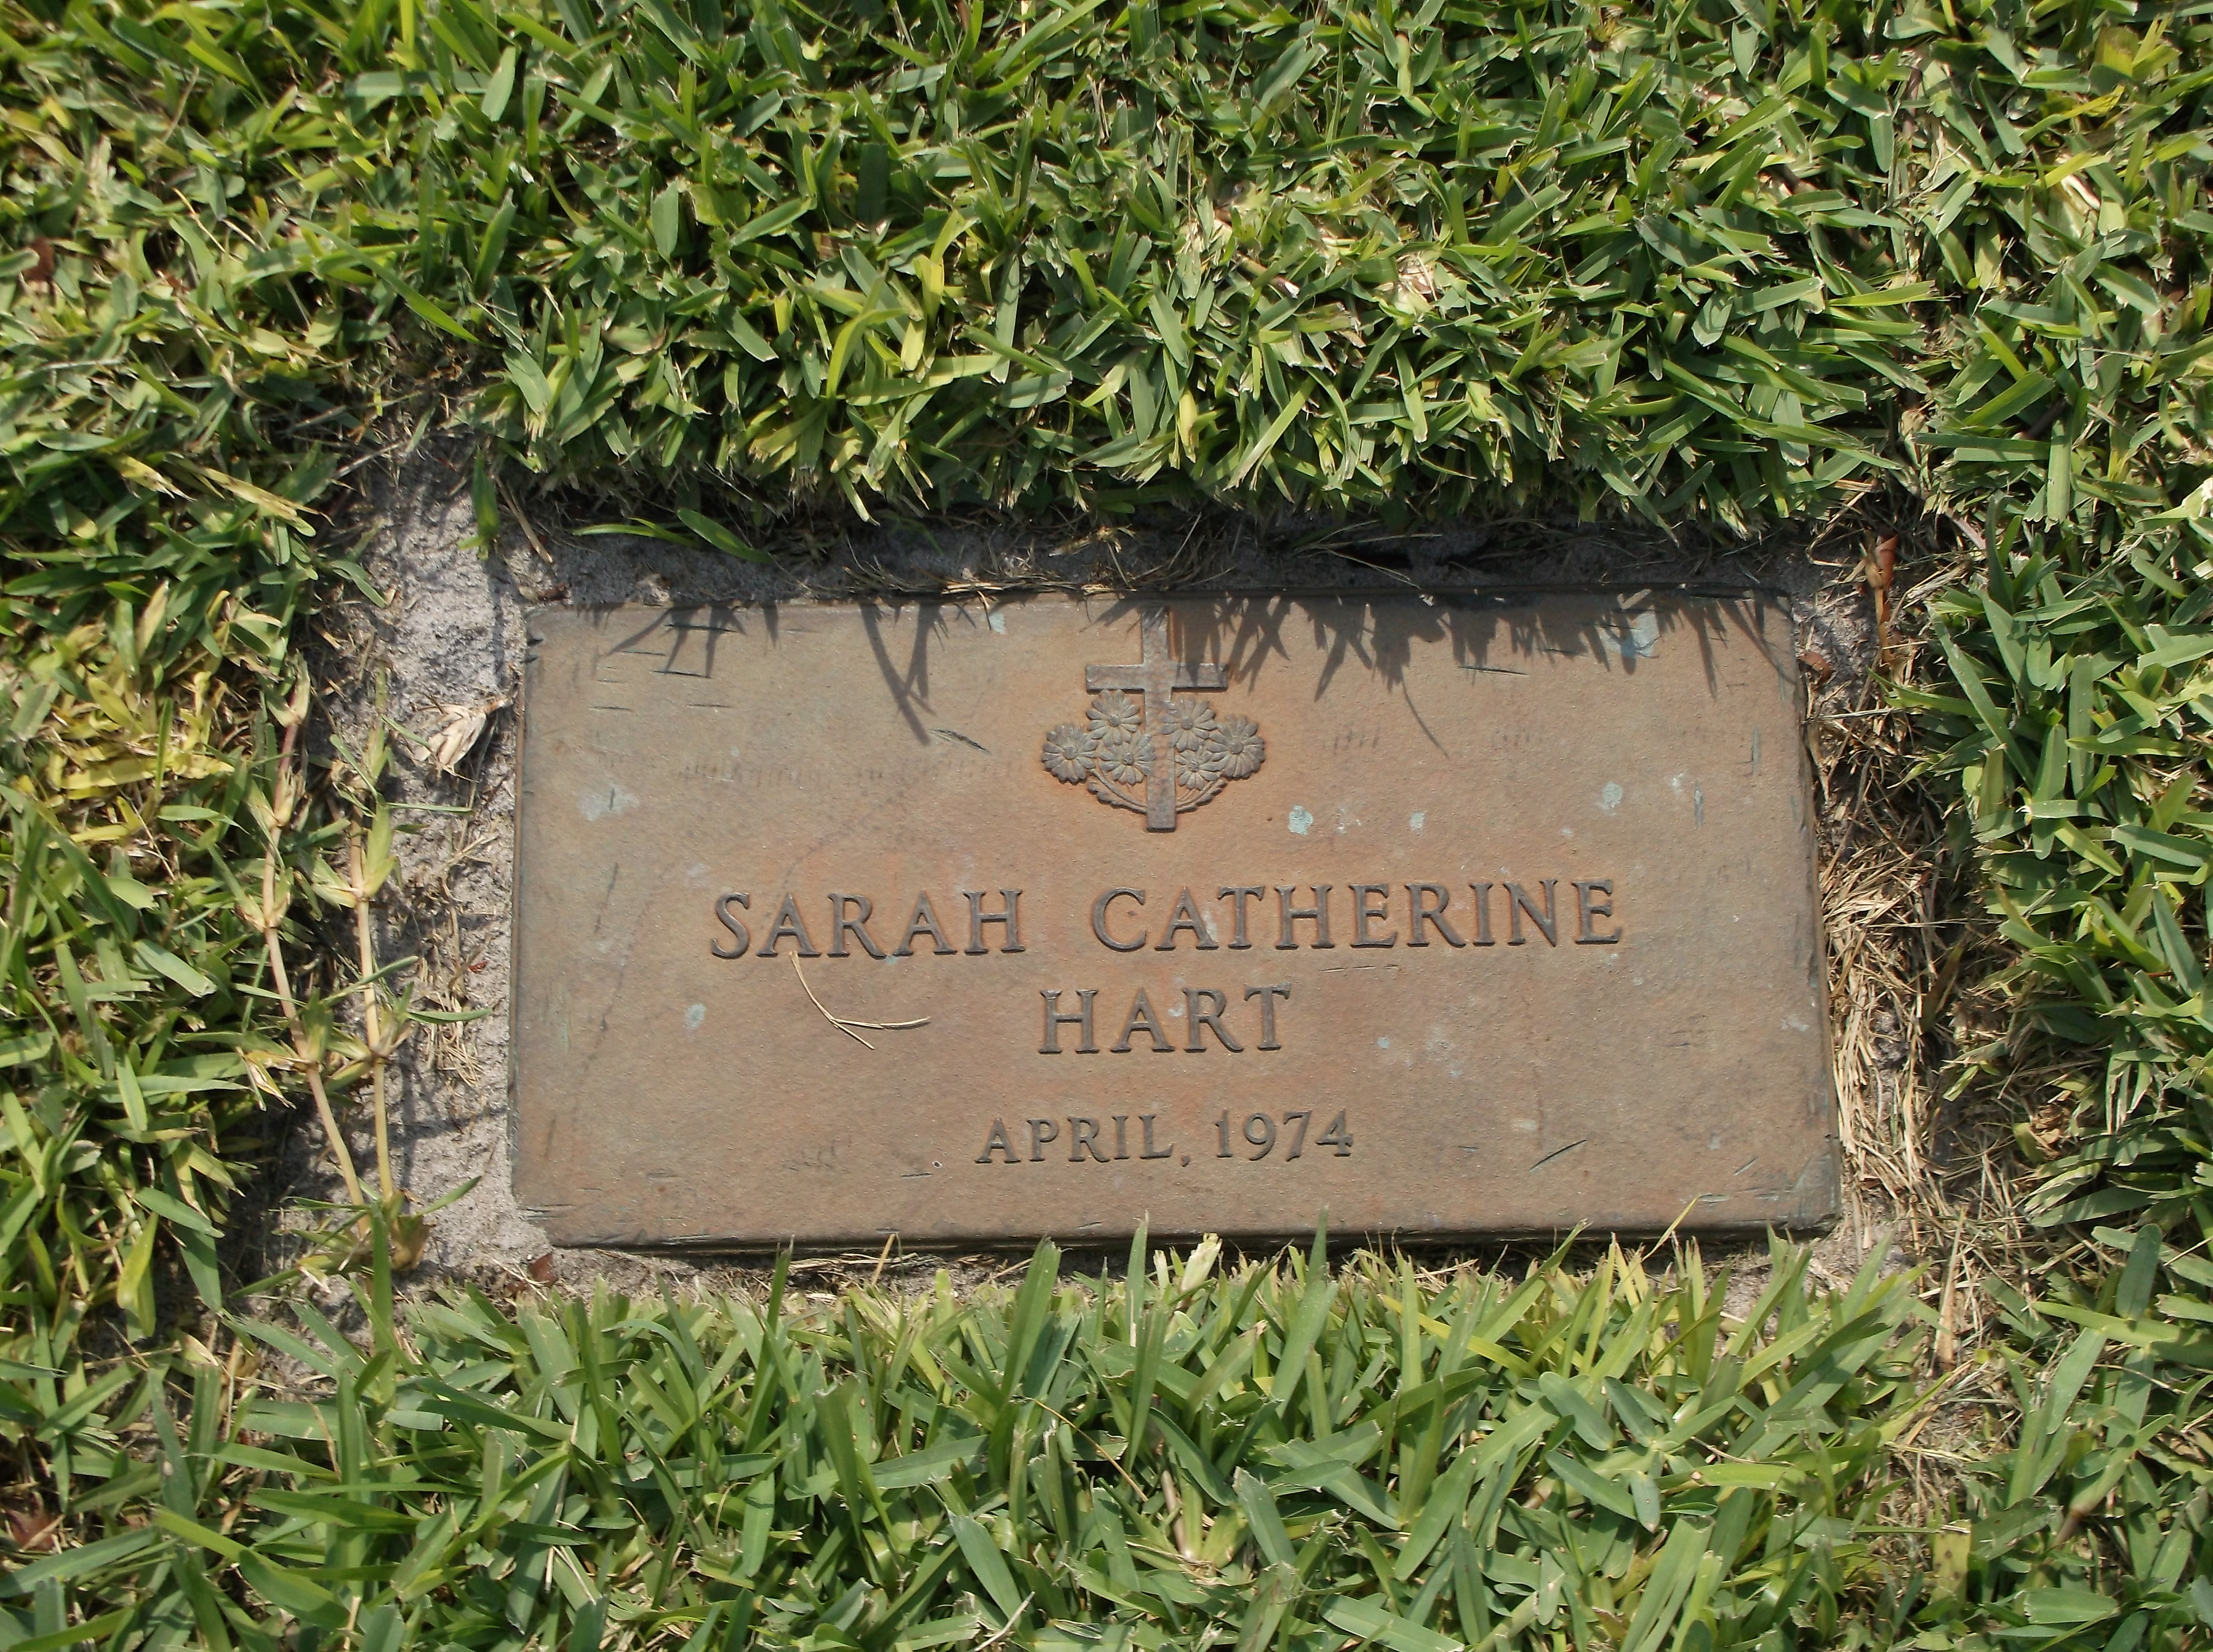 Sarah Catherine Hart